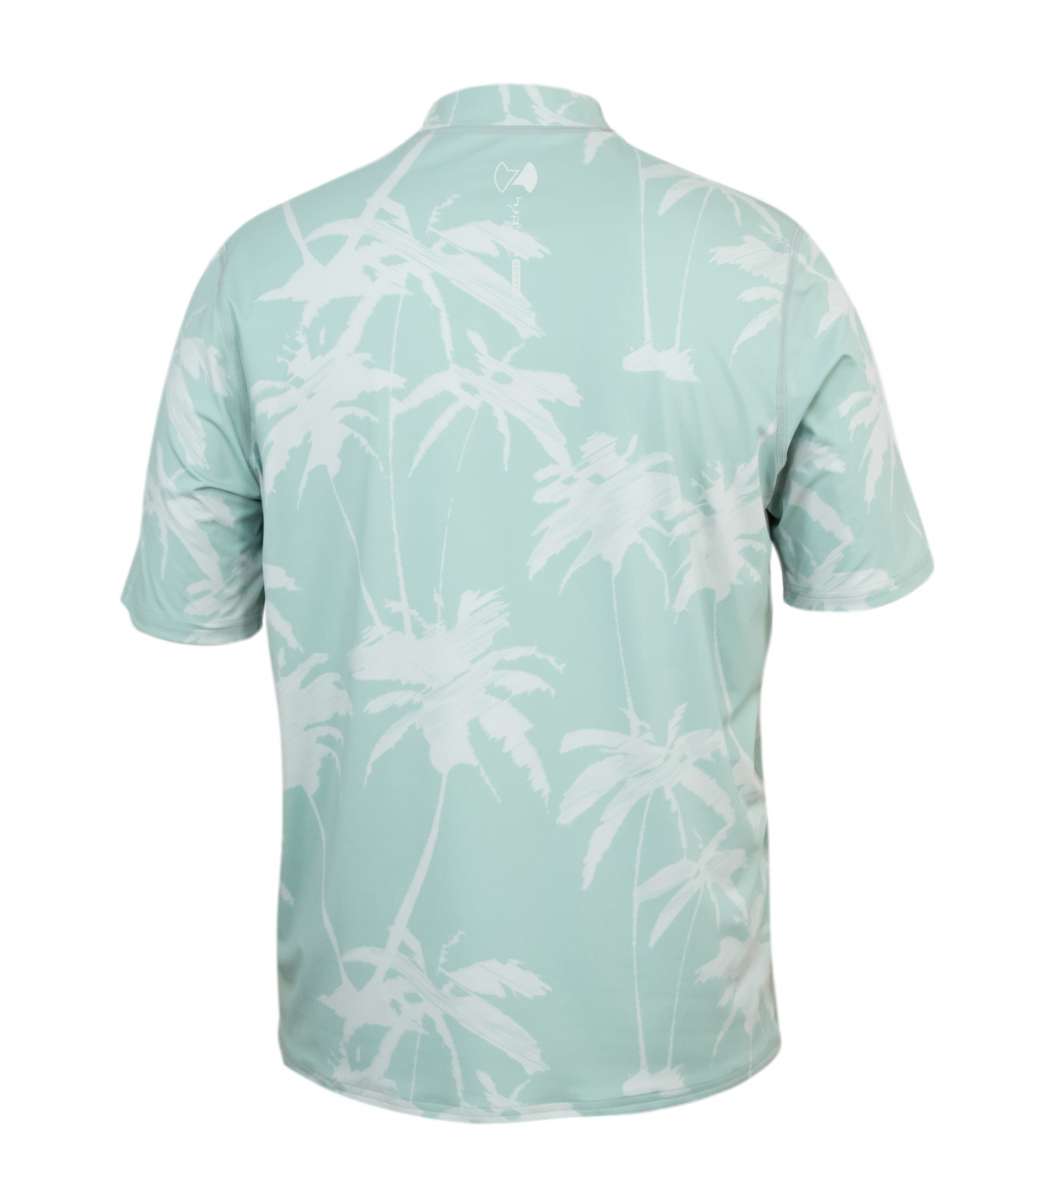 UV Shirt 'palms' back view 